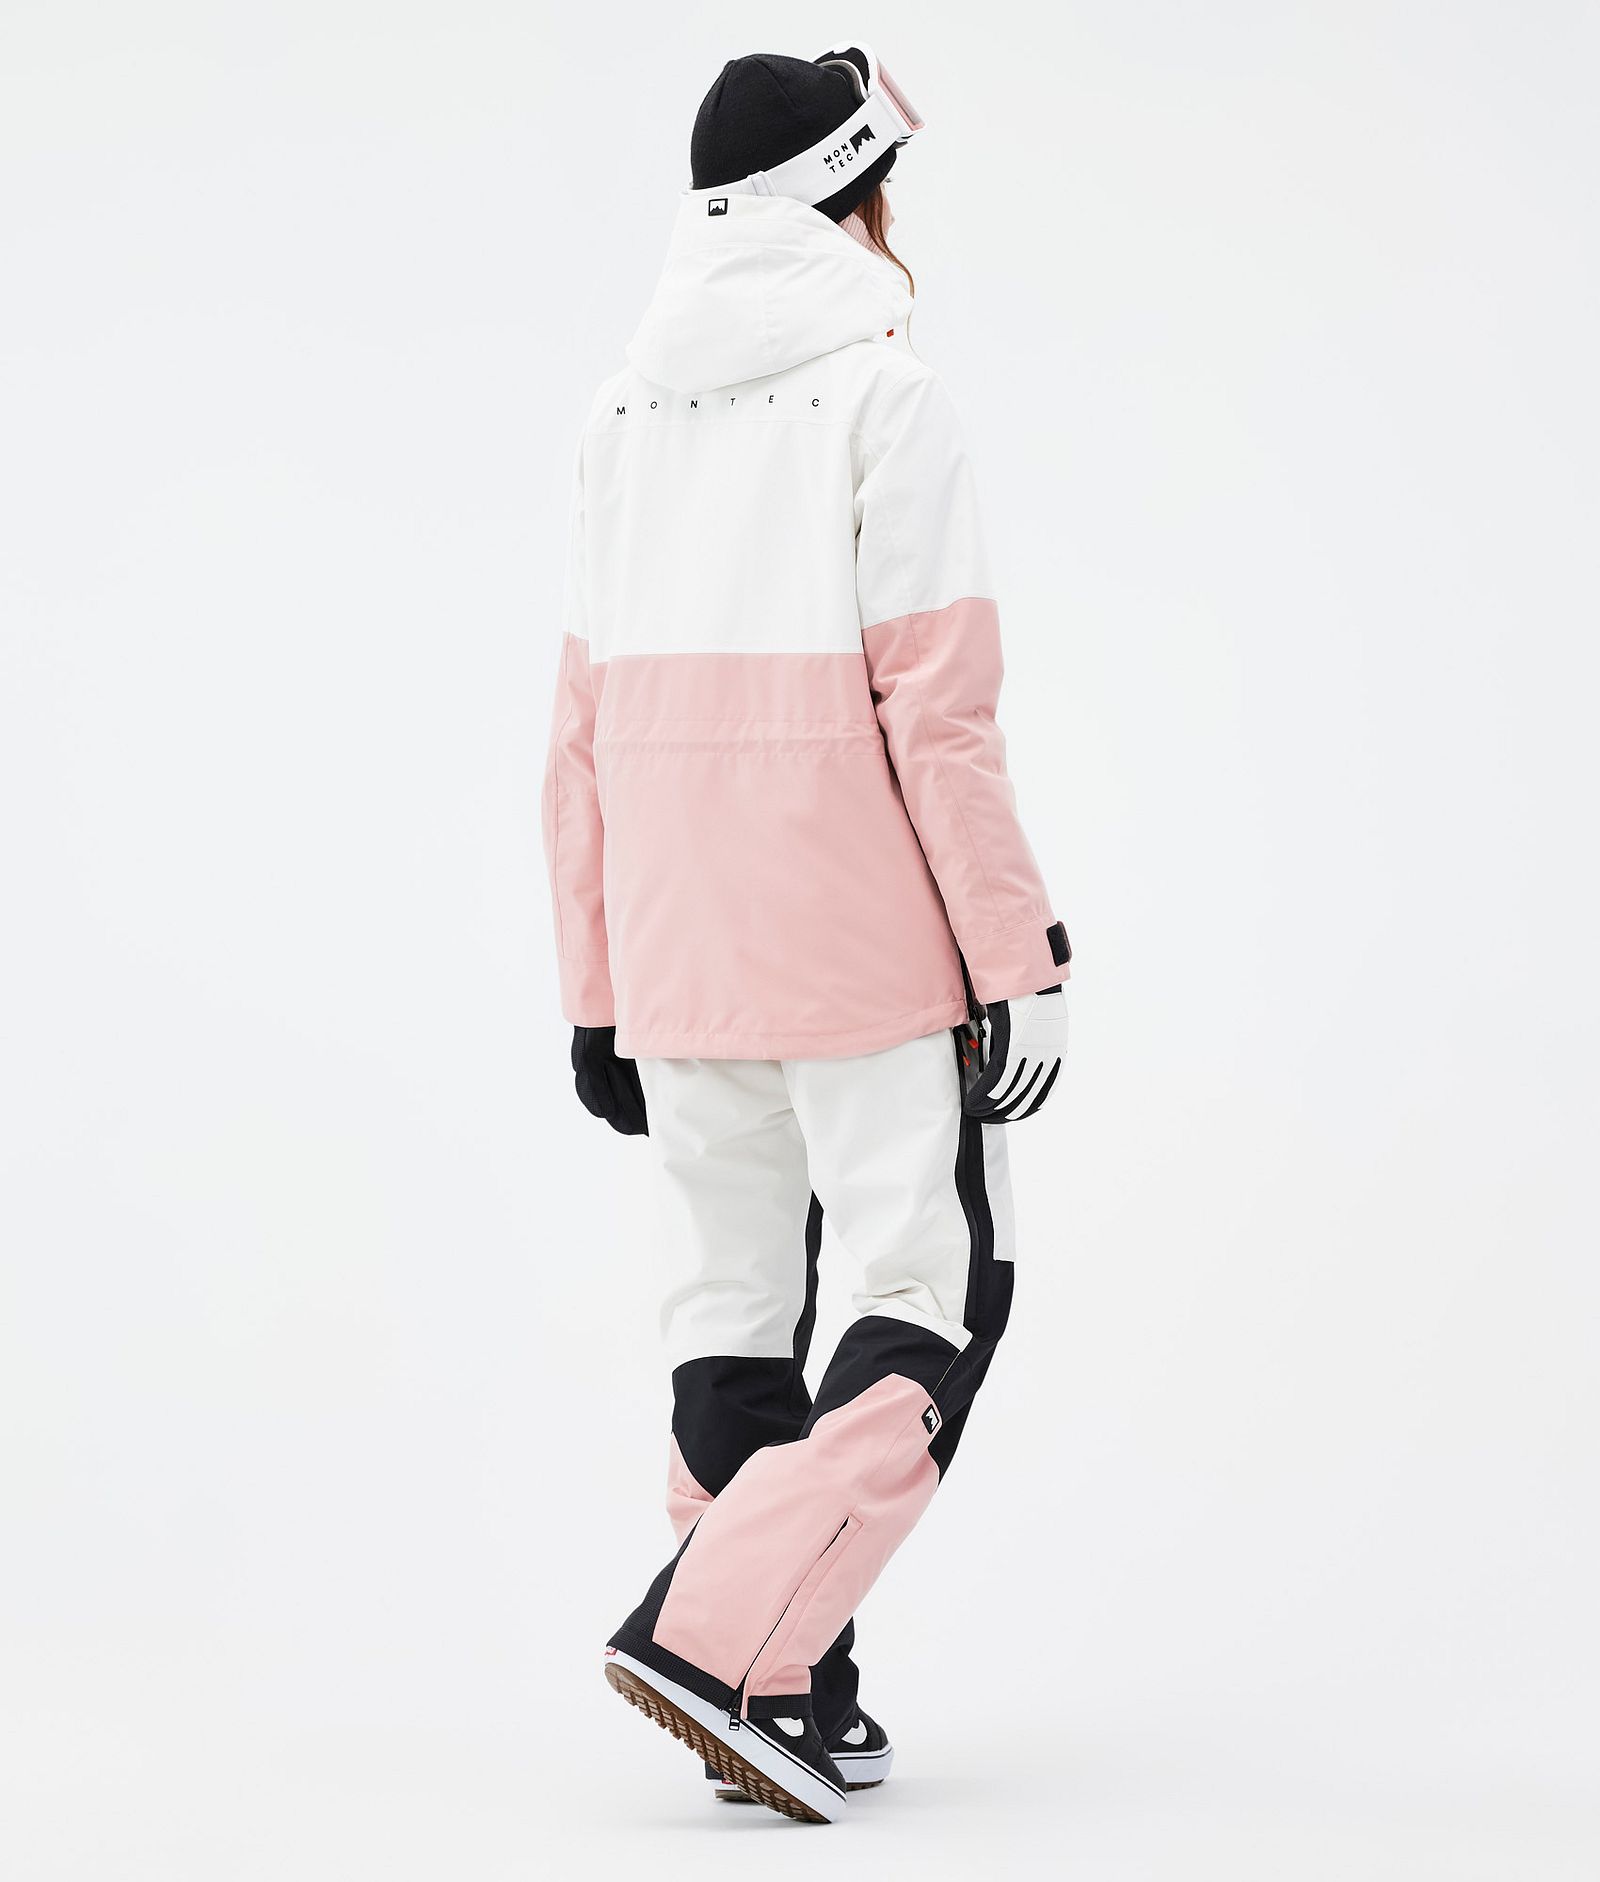 Dune W Giacca Snowboard Donna Old White/Black/Soft Pink, Immagine 5 di 9